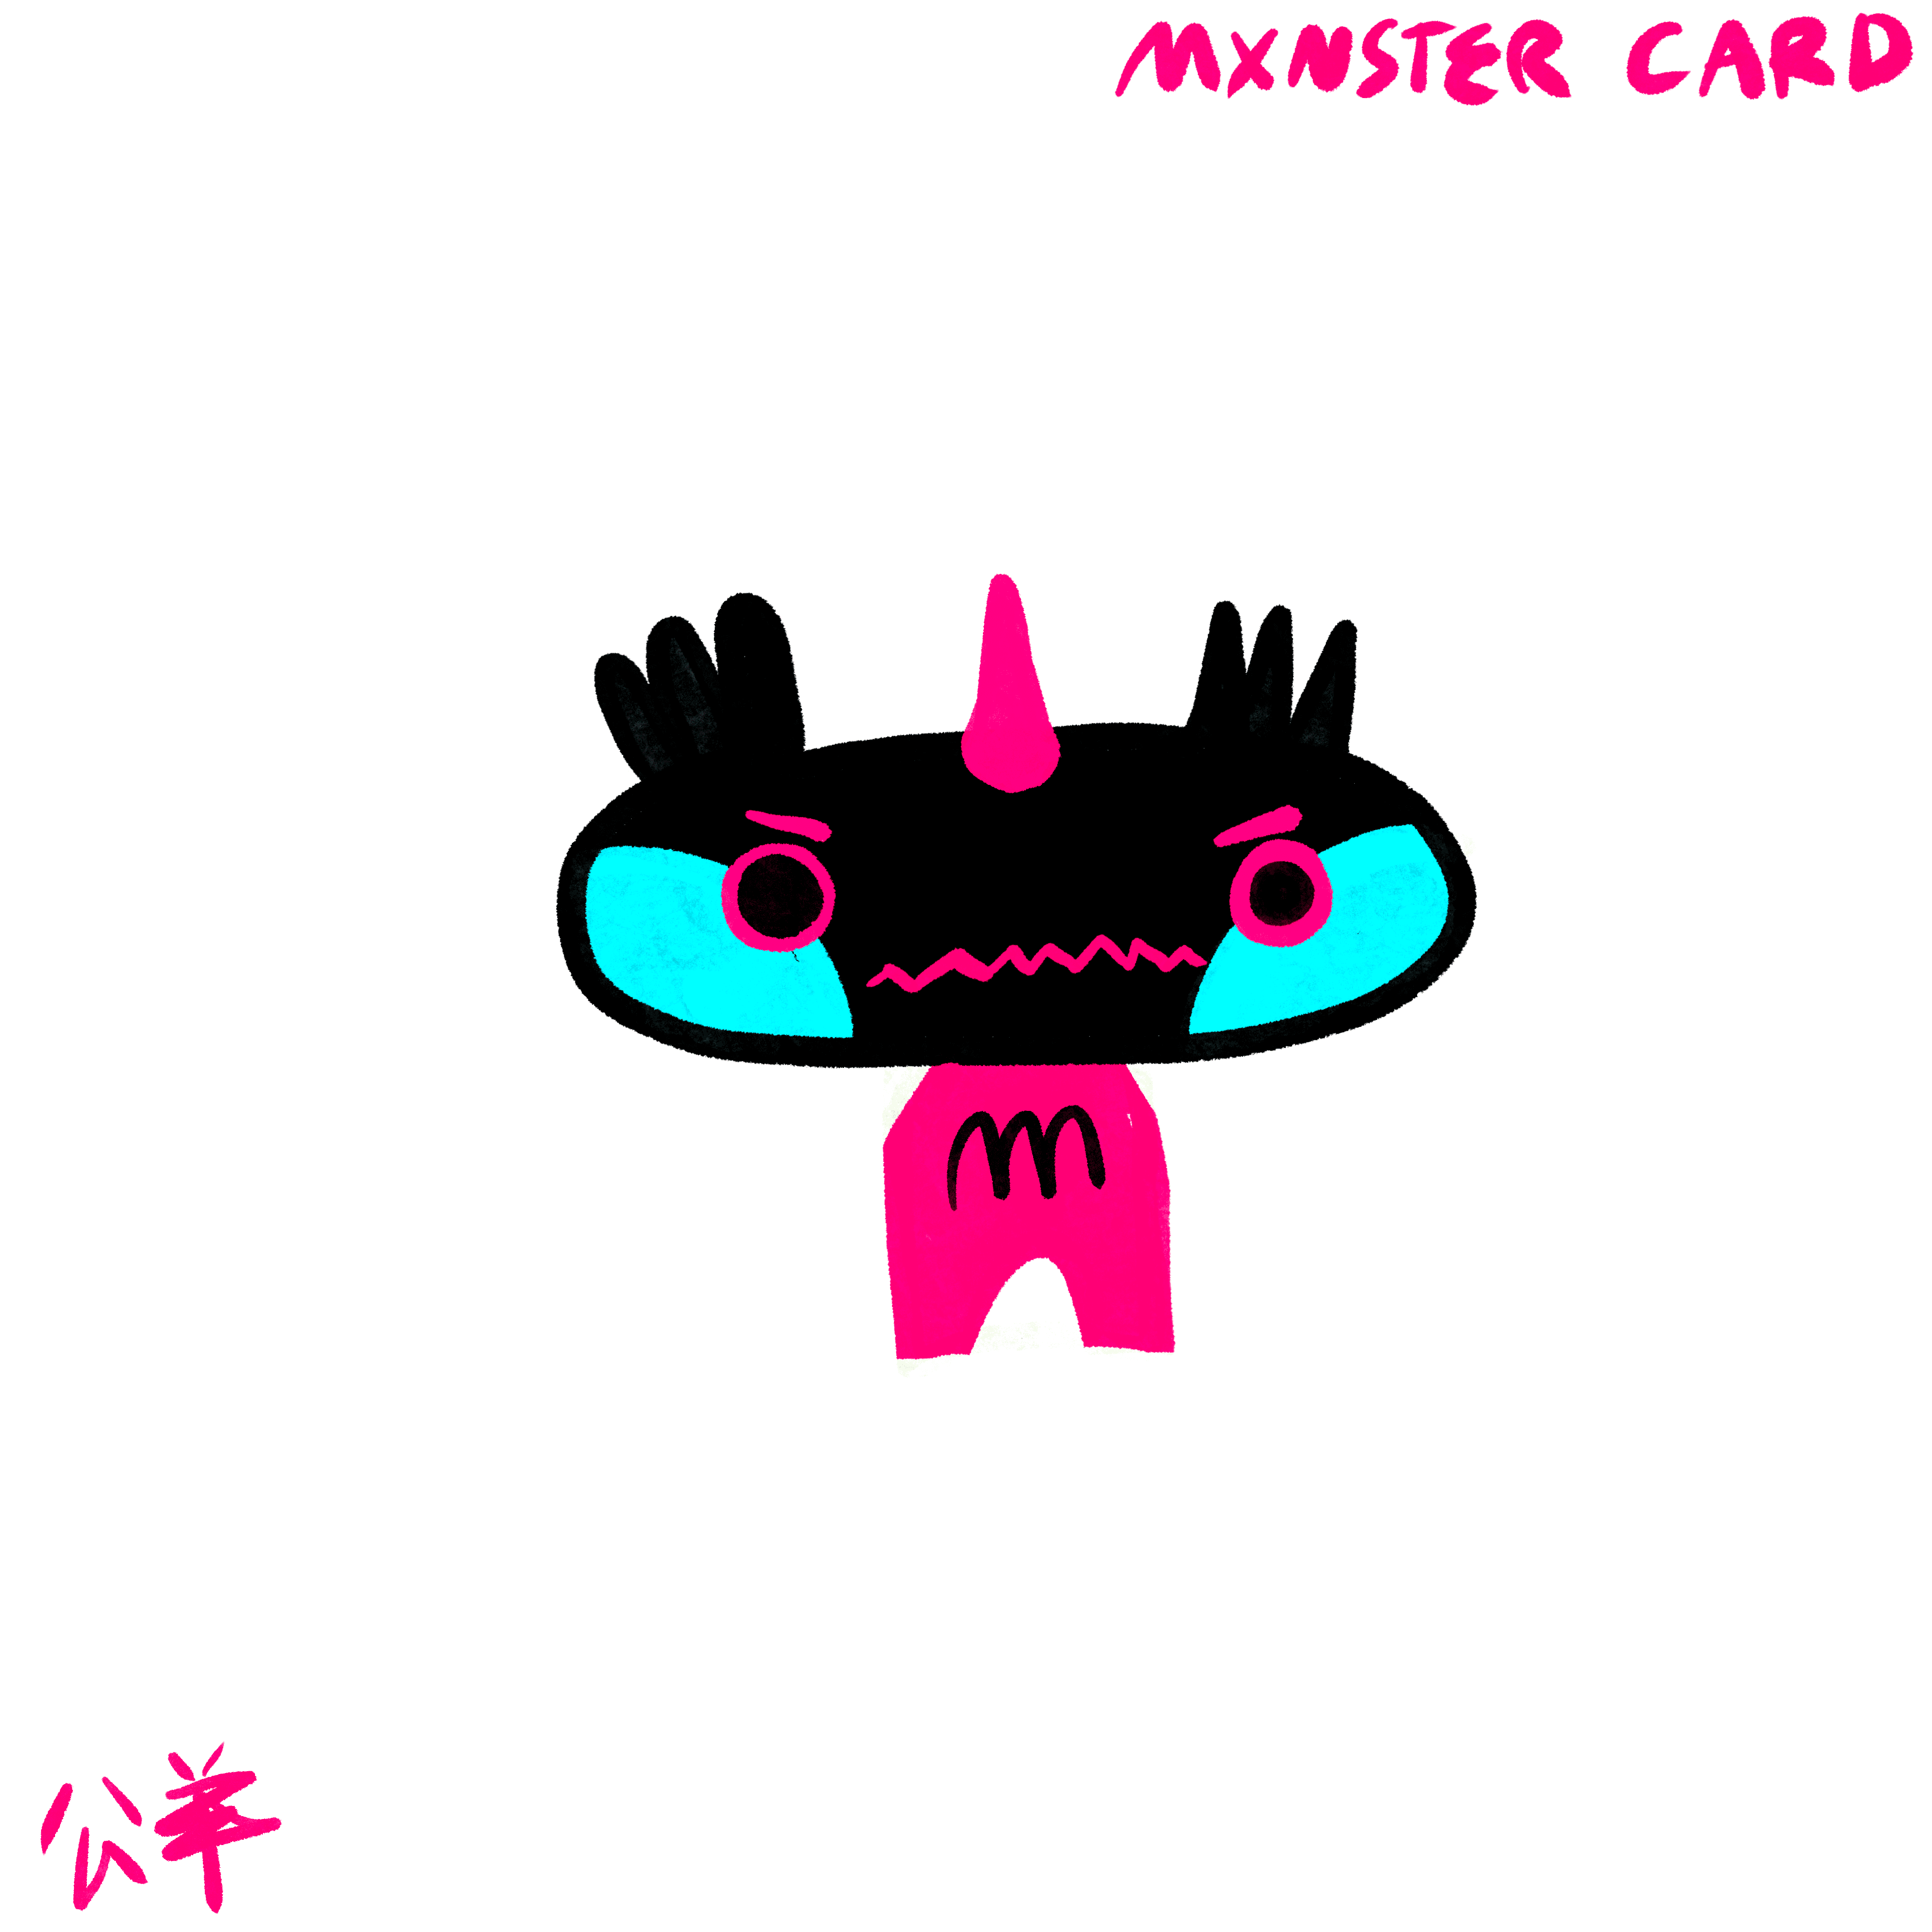 Mxnster Card 08